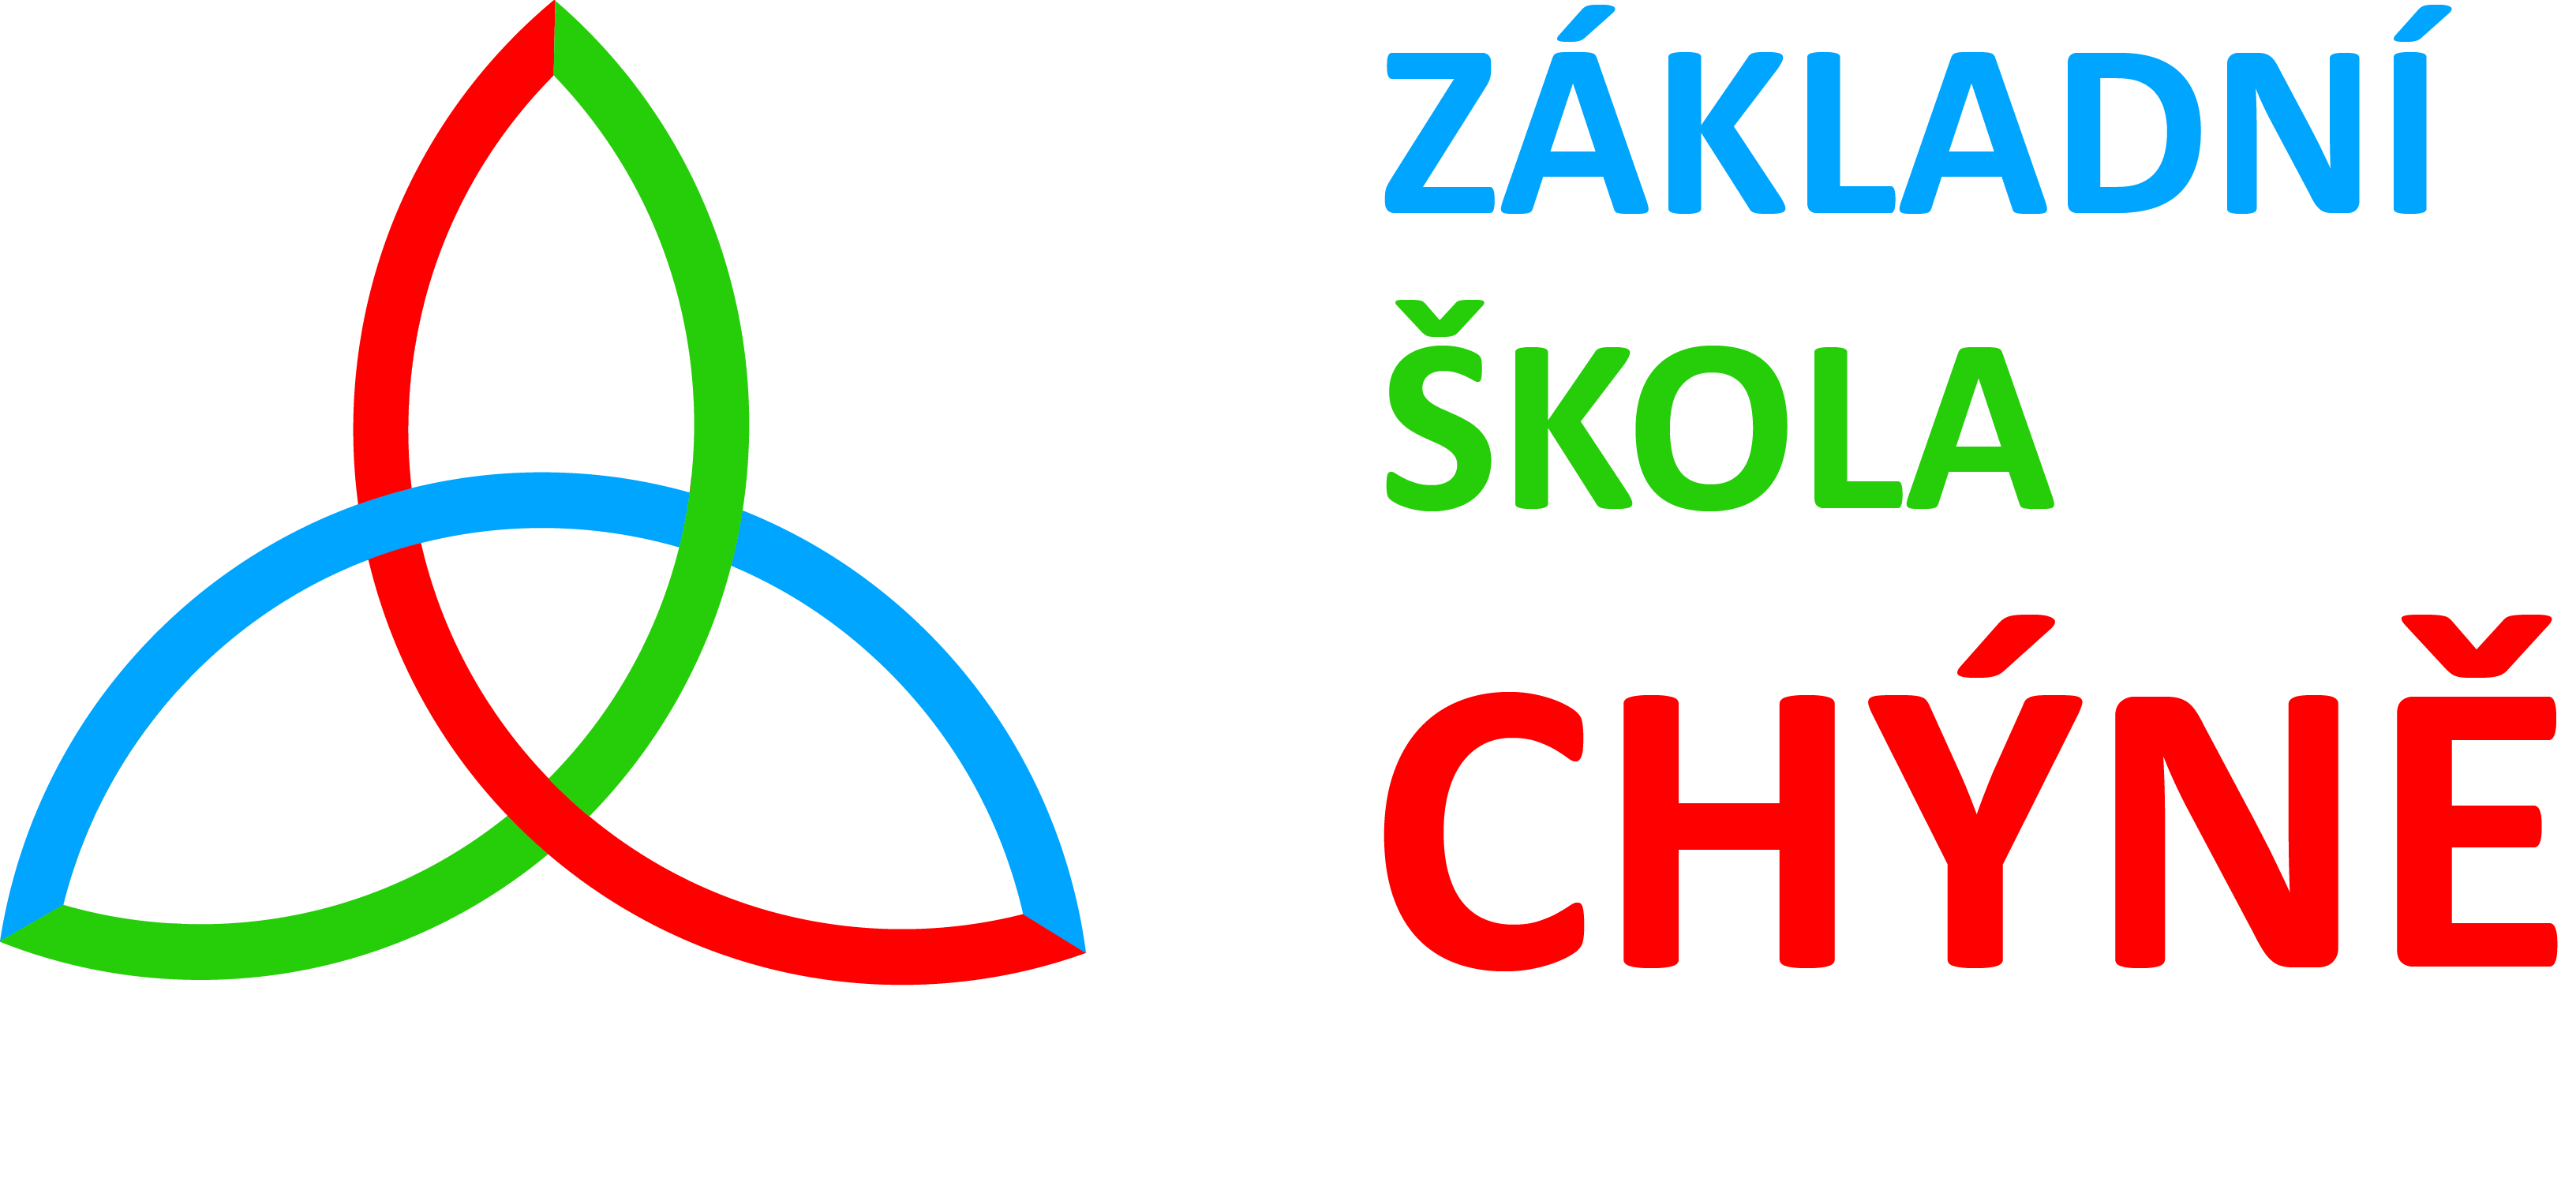 01 logo chyne zk